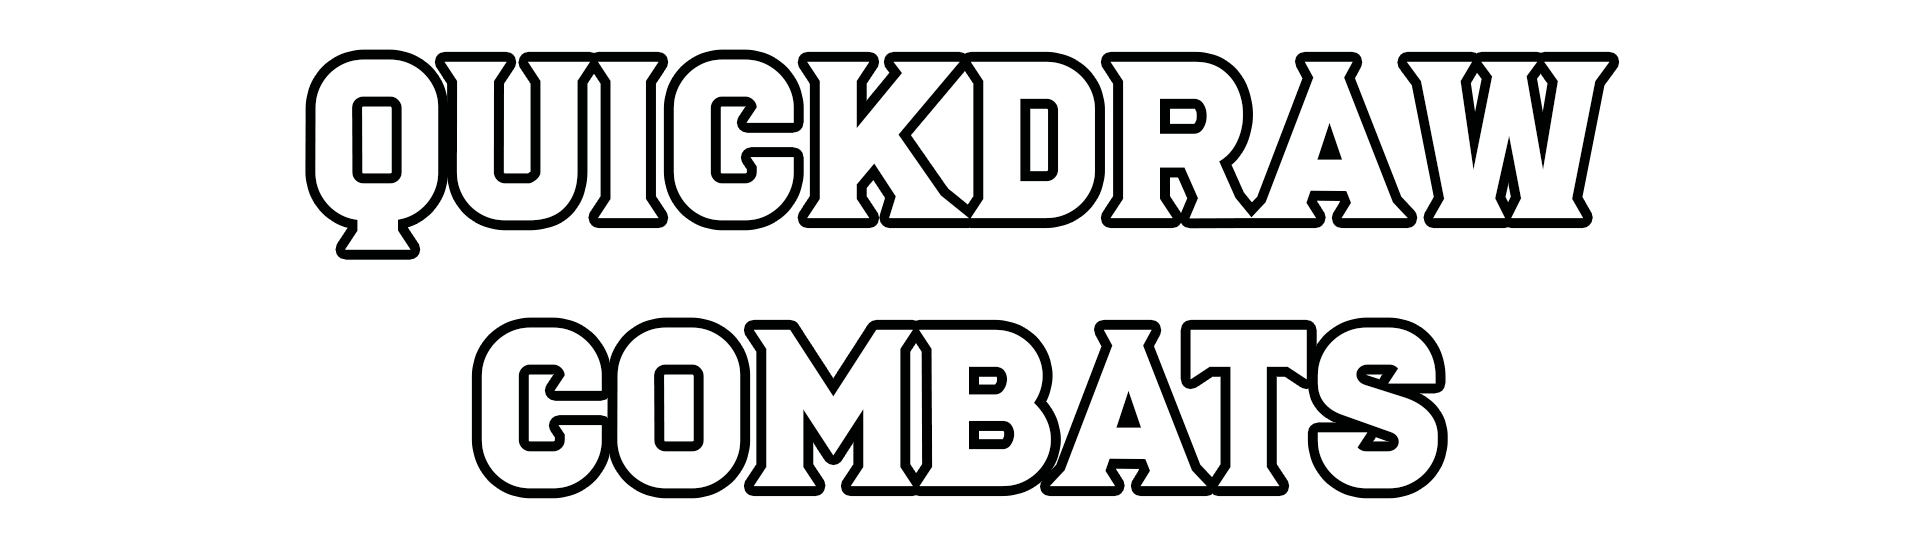 Quickdraw Combats - Instant TTRPG Encounters!